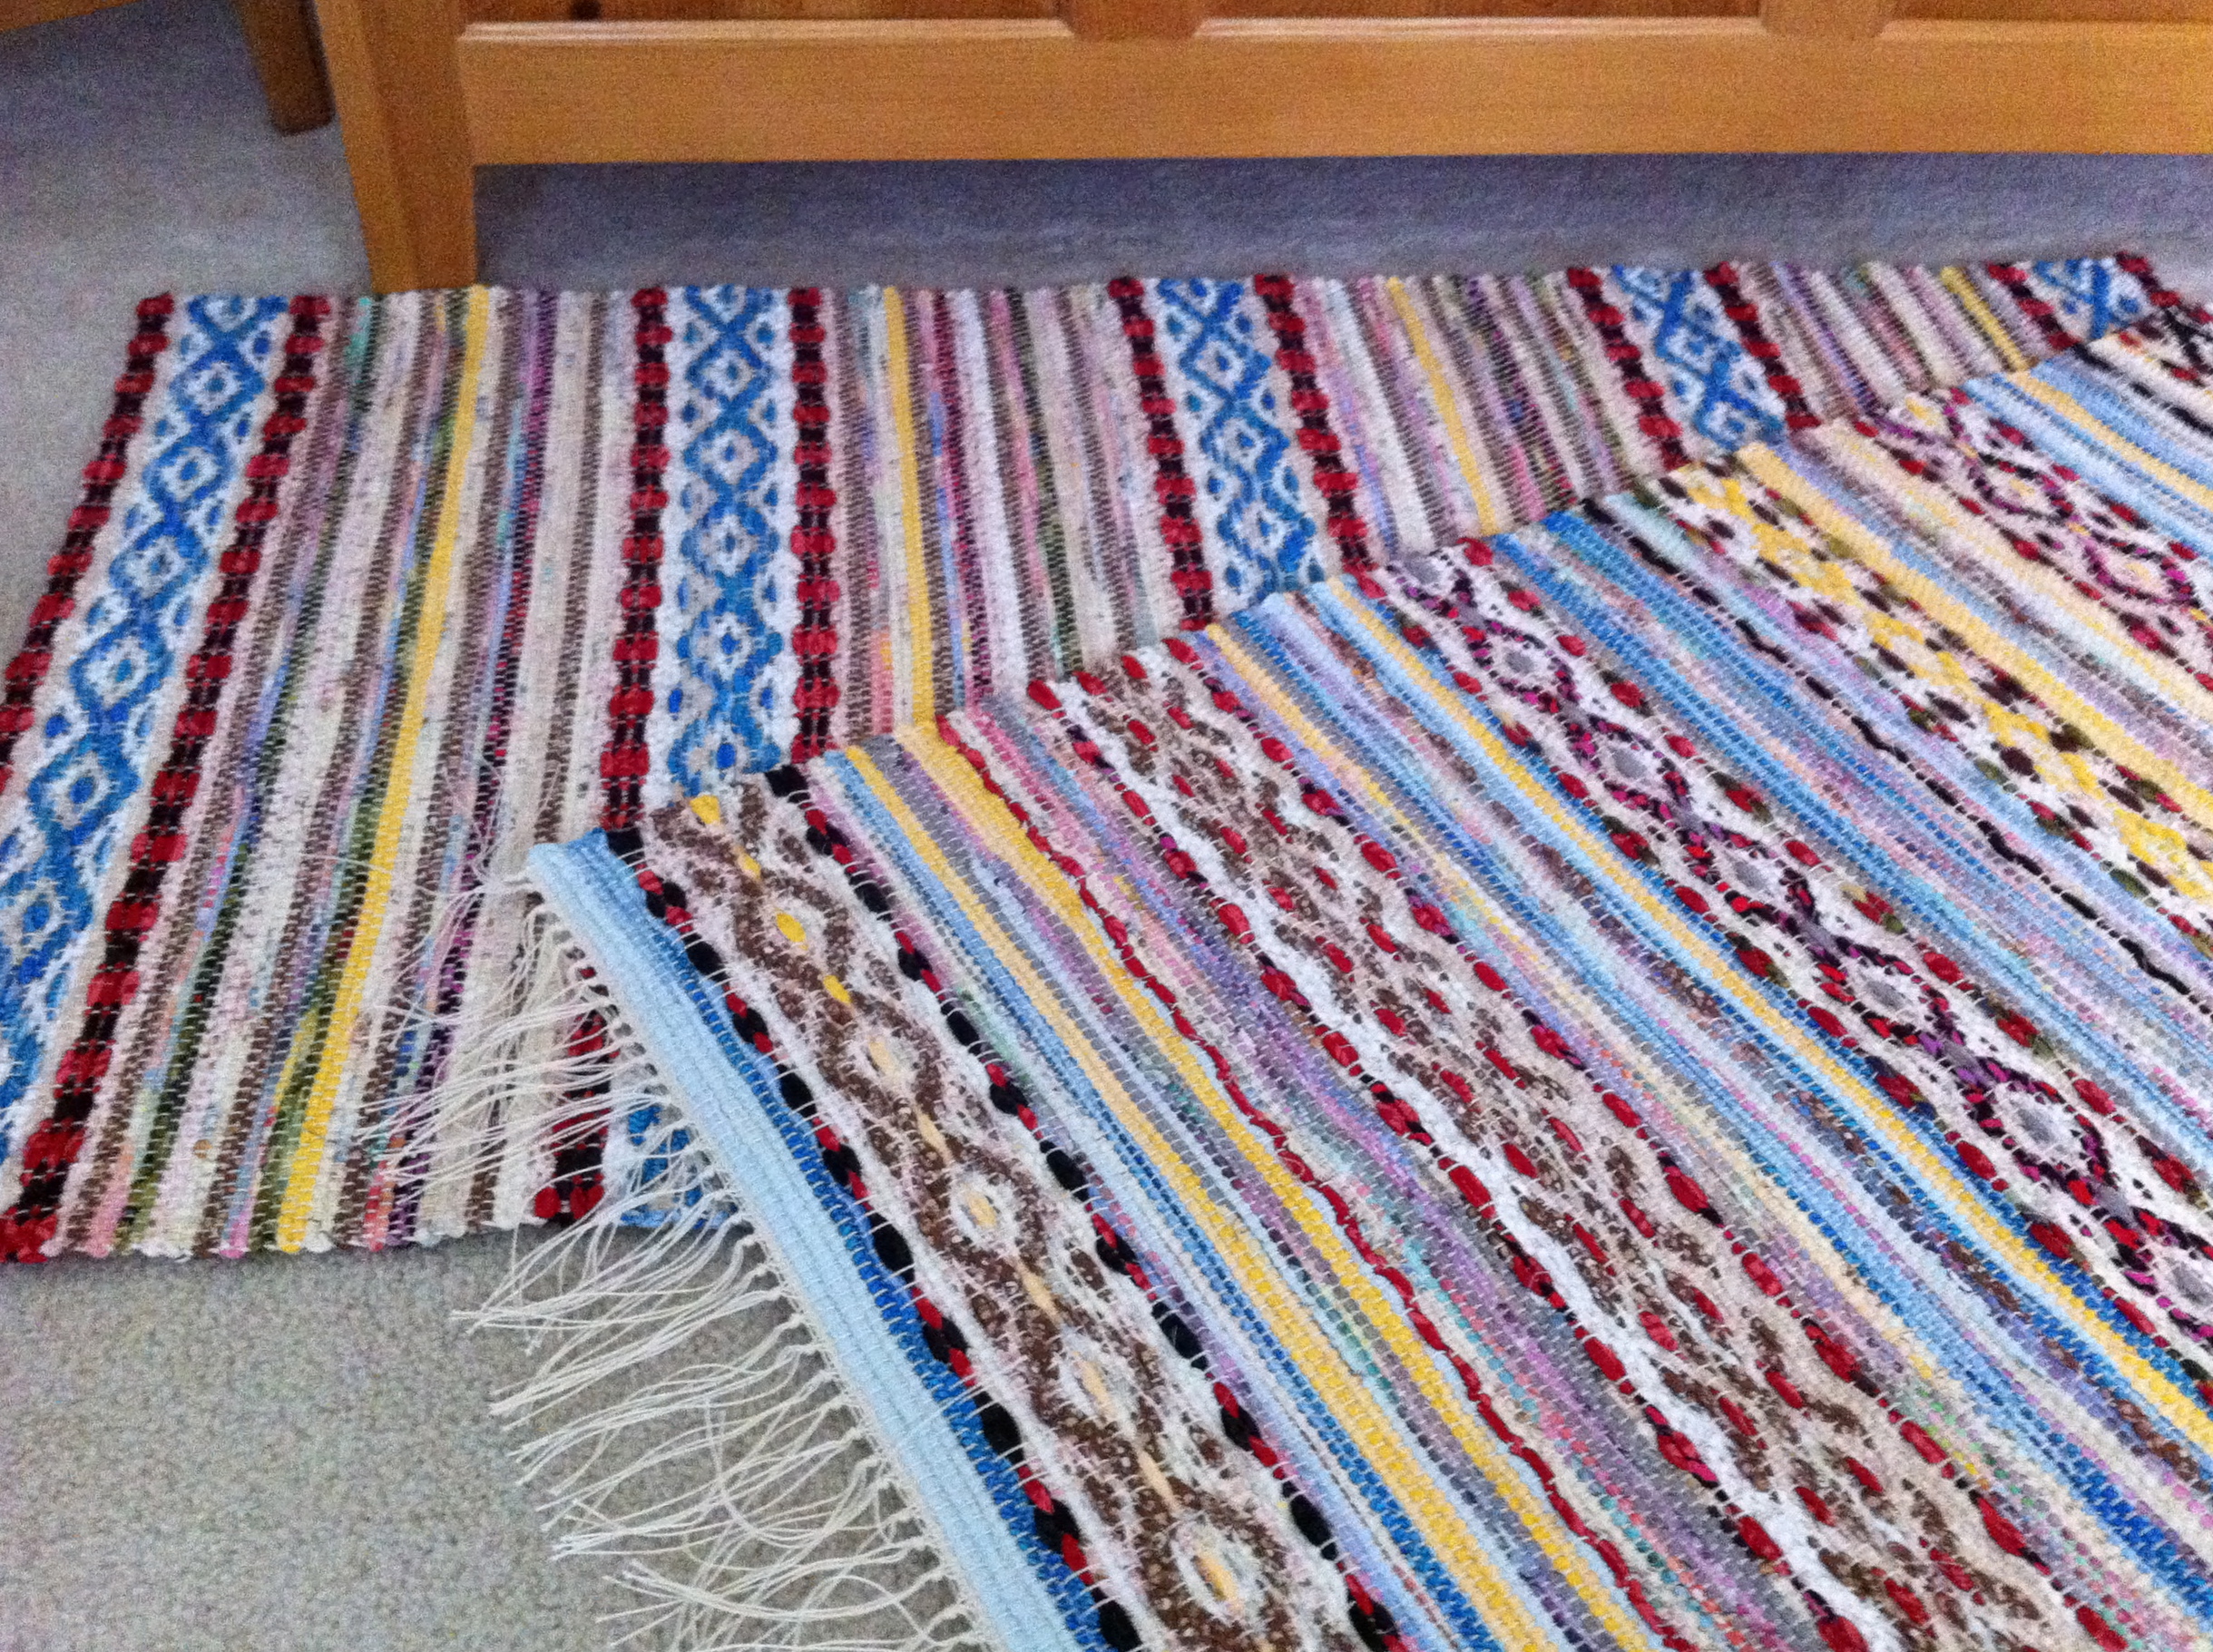 Characteristics of rag rugs